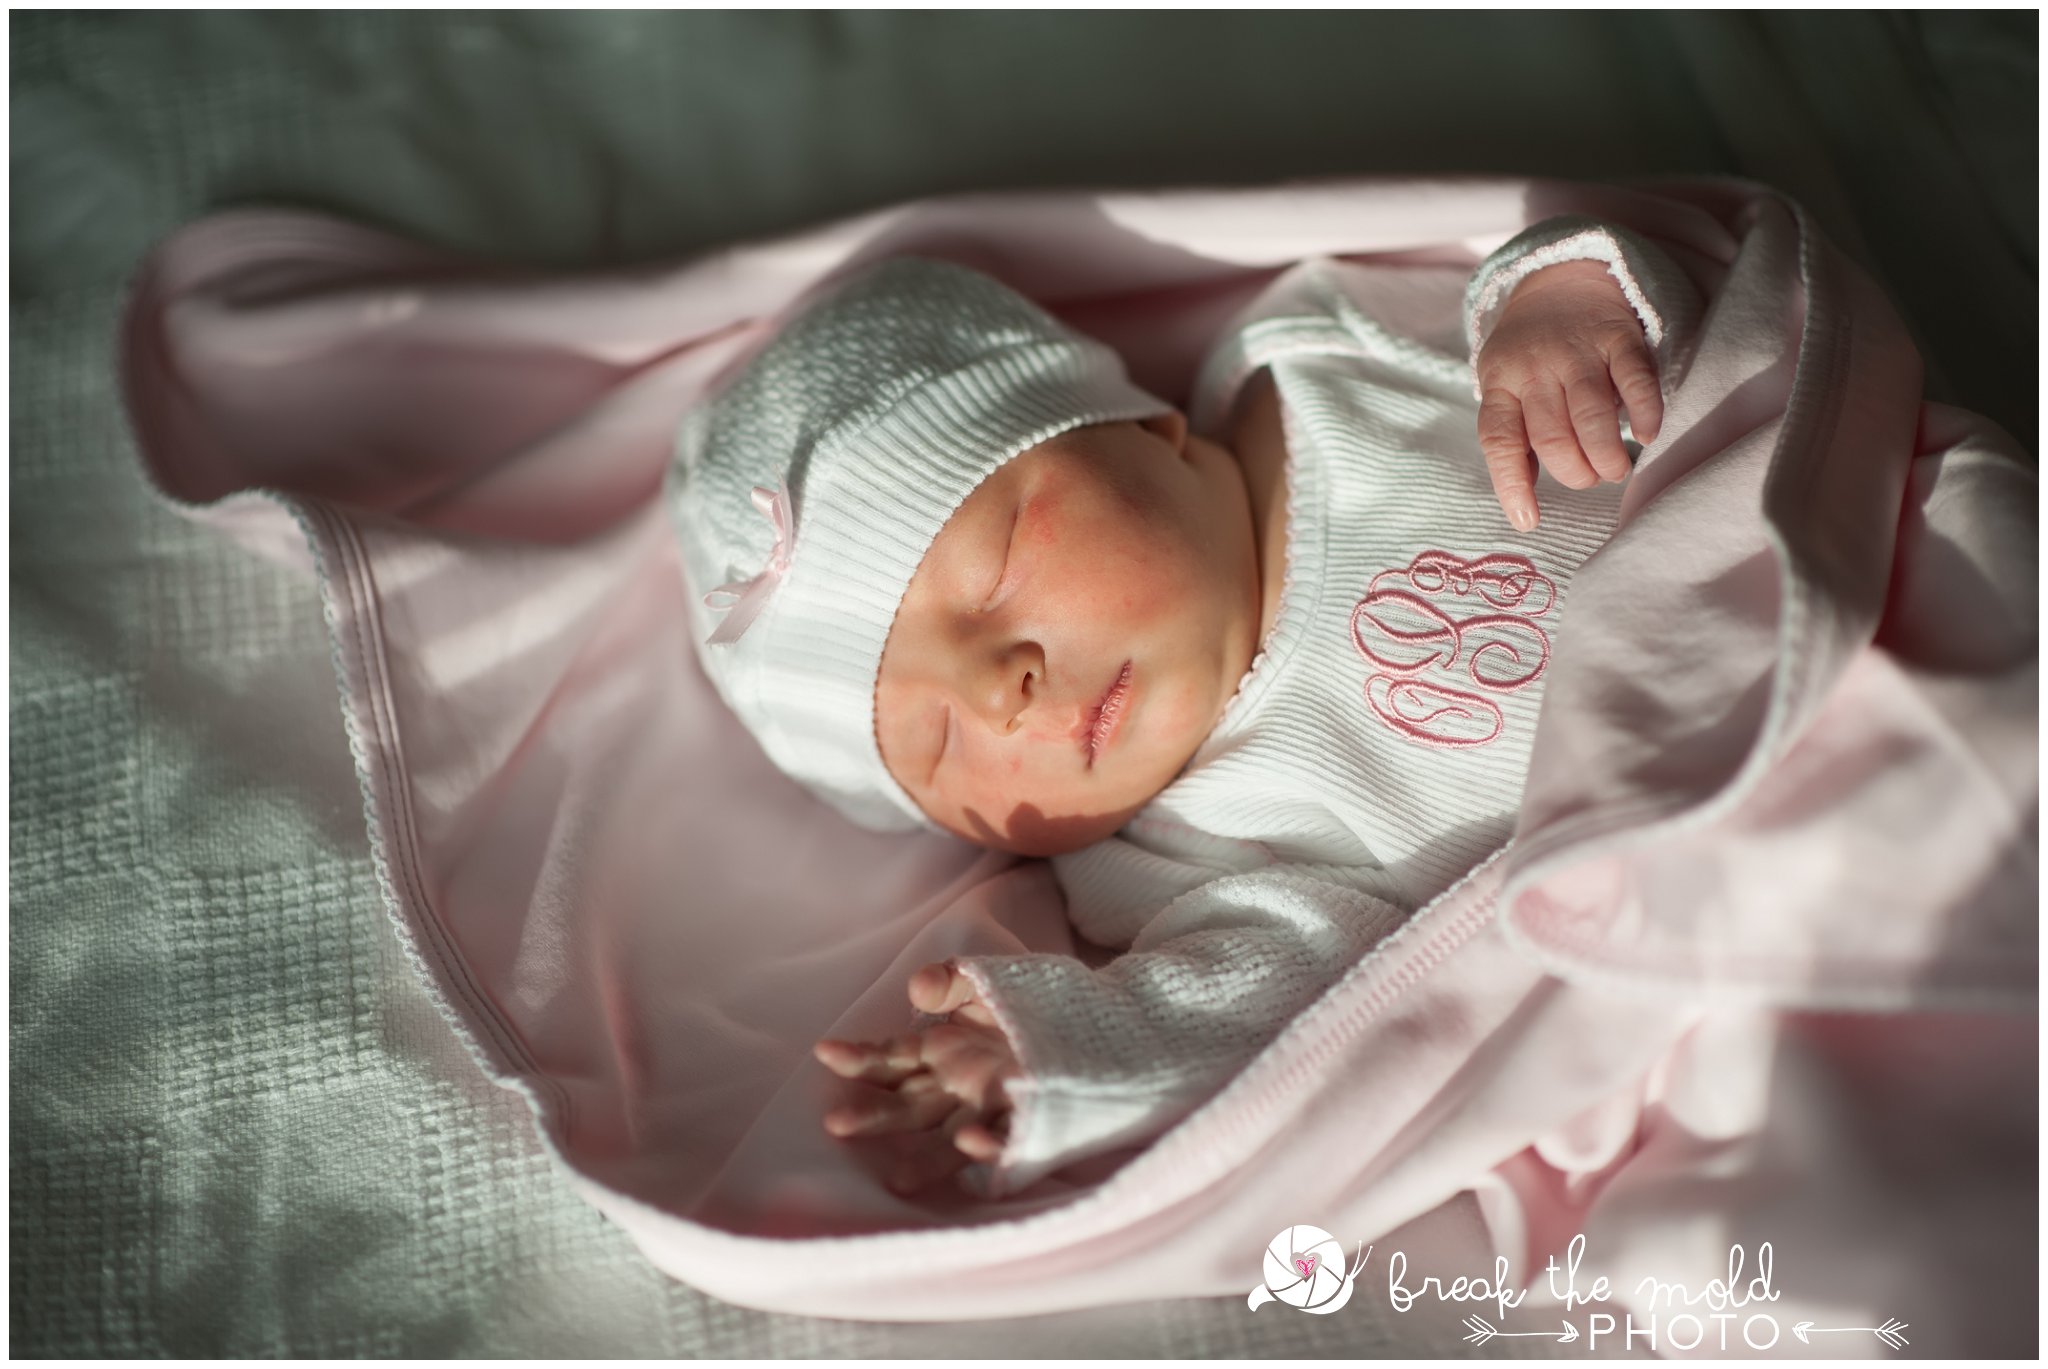 fresh-24-newborn-in-hospital-break-the-mold-photo-baby-girl-sweet-in-room-photos (26).jpg